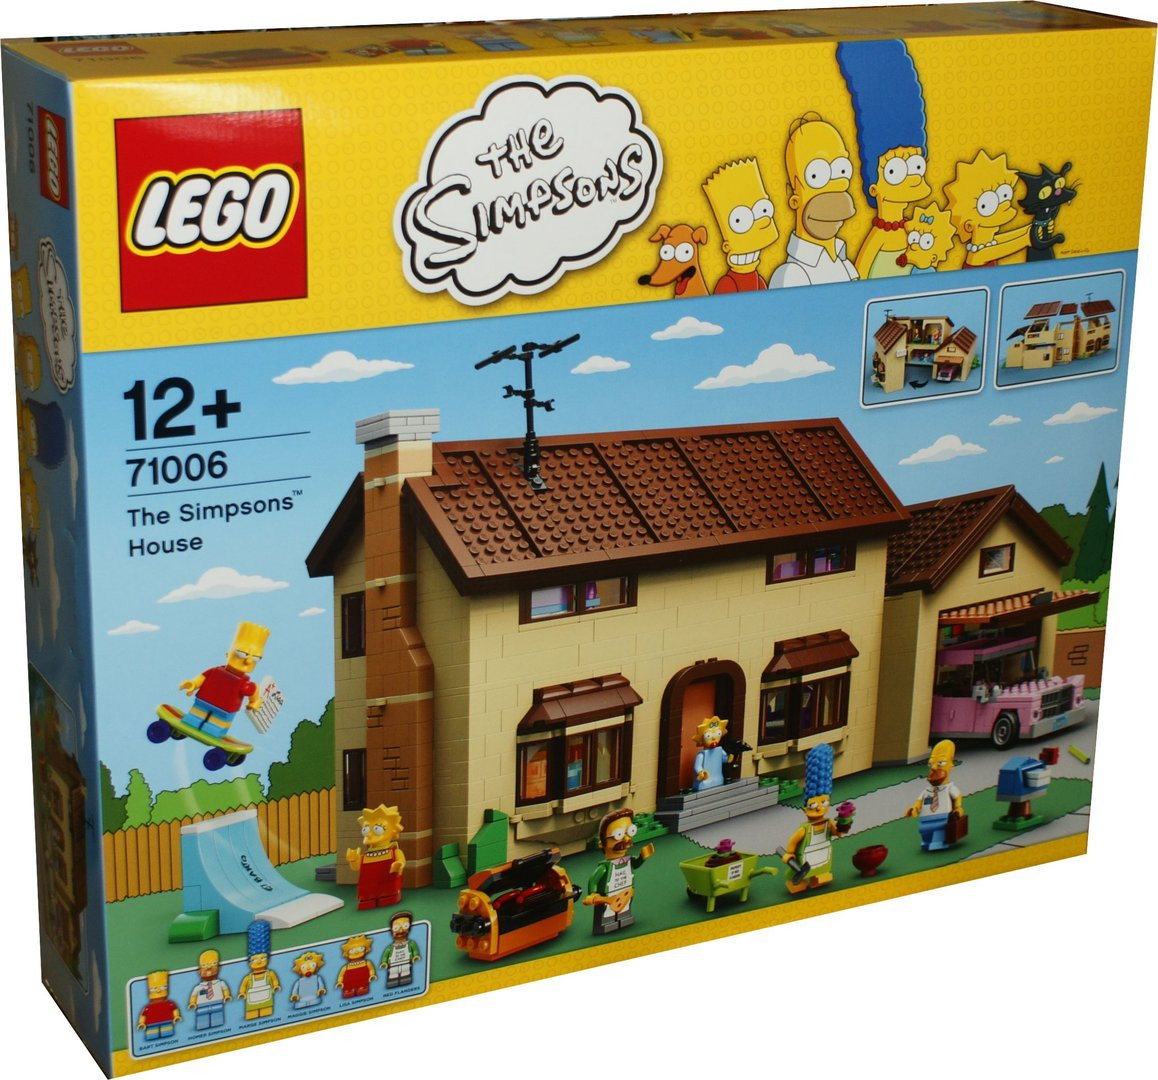 Lego Simpsons Haus
 LEGO Exklusiv Simpsons Haus Berlin Teltow günstig kaufen